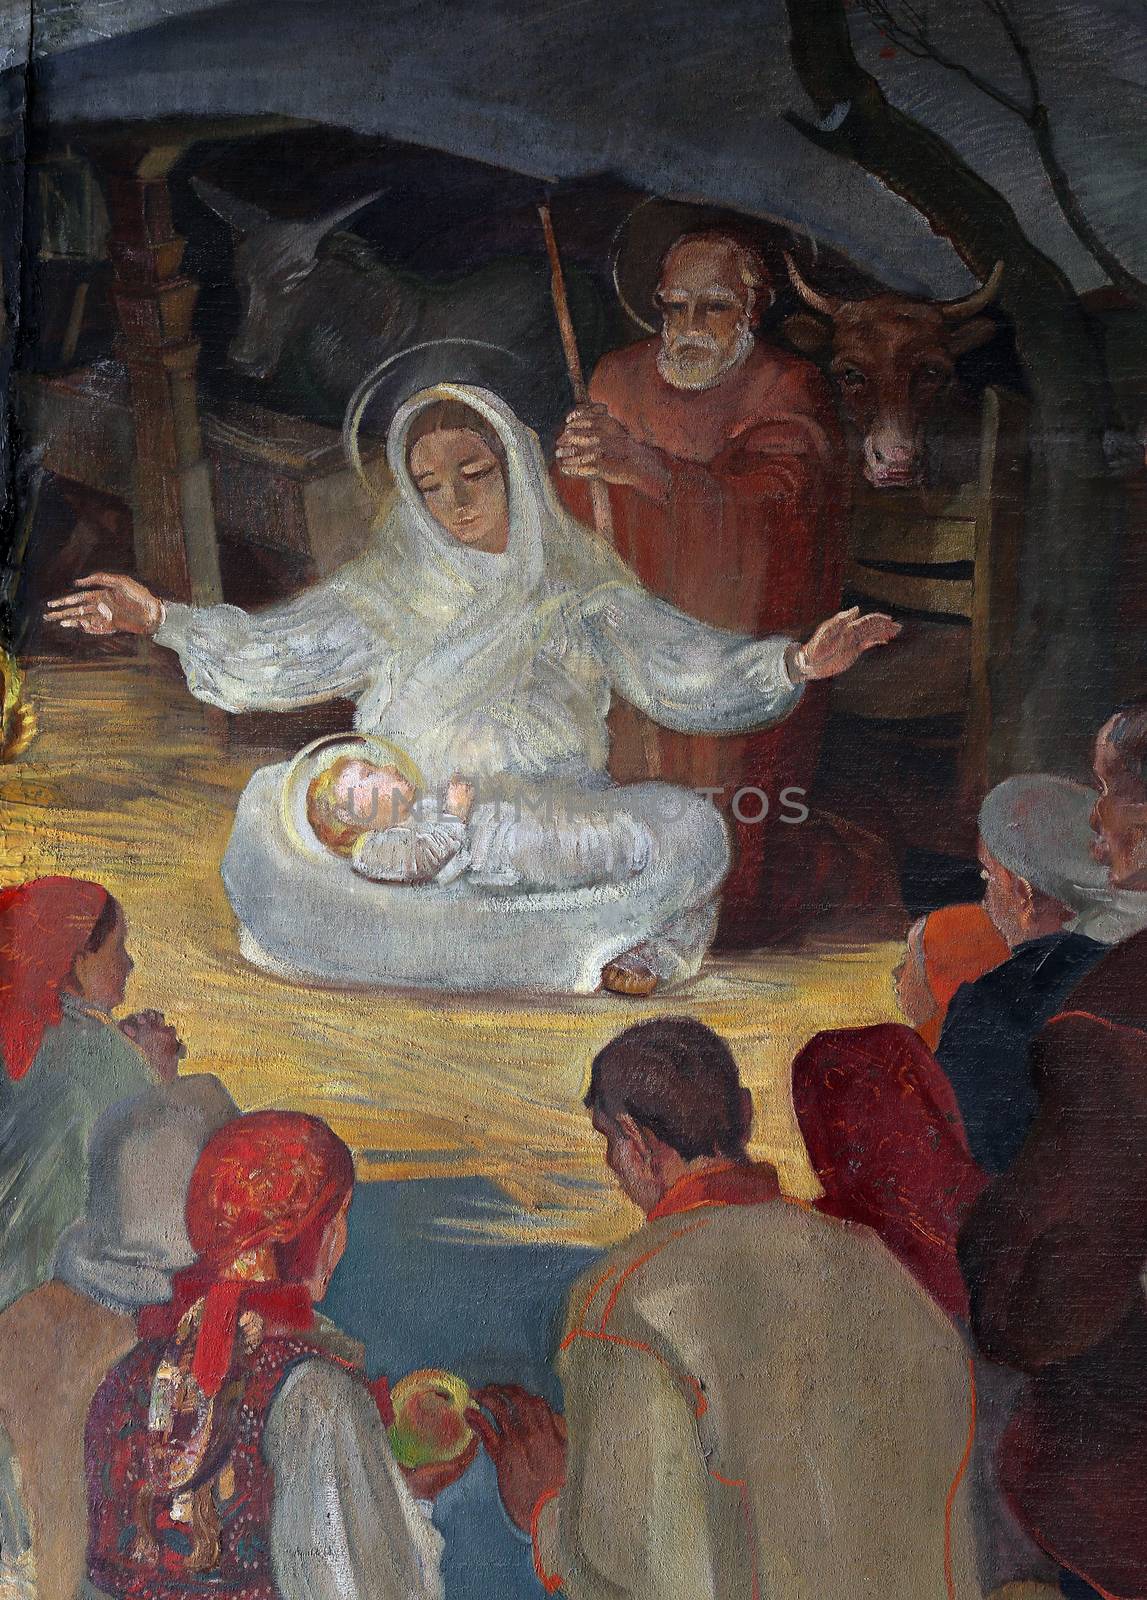 Birth of Jesus by atlas